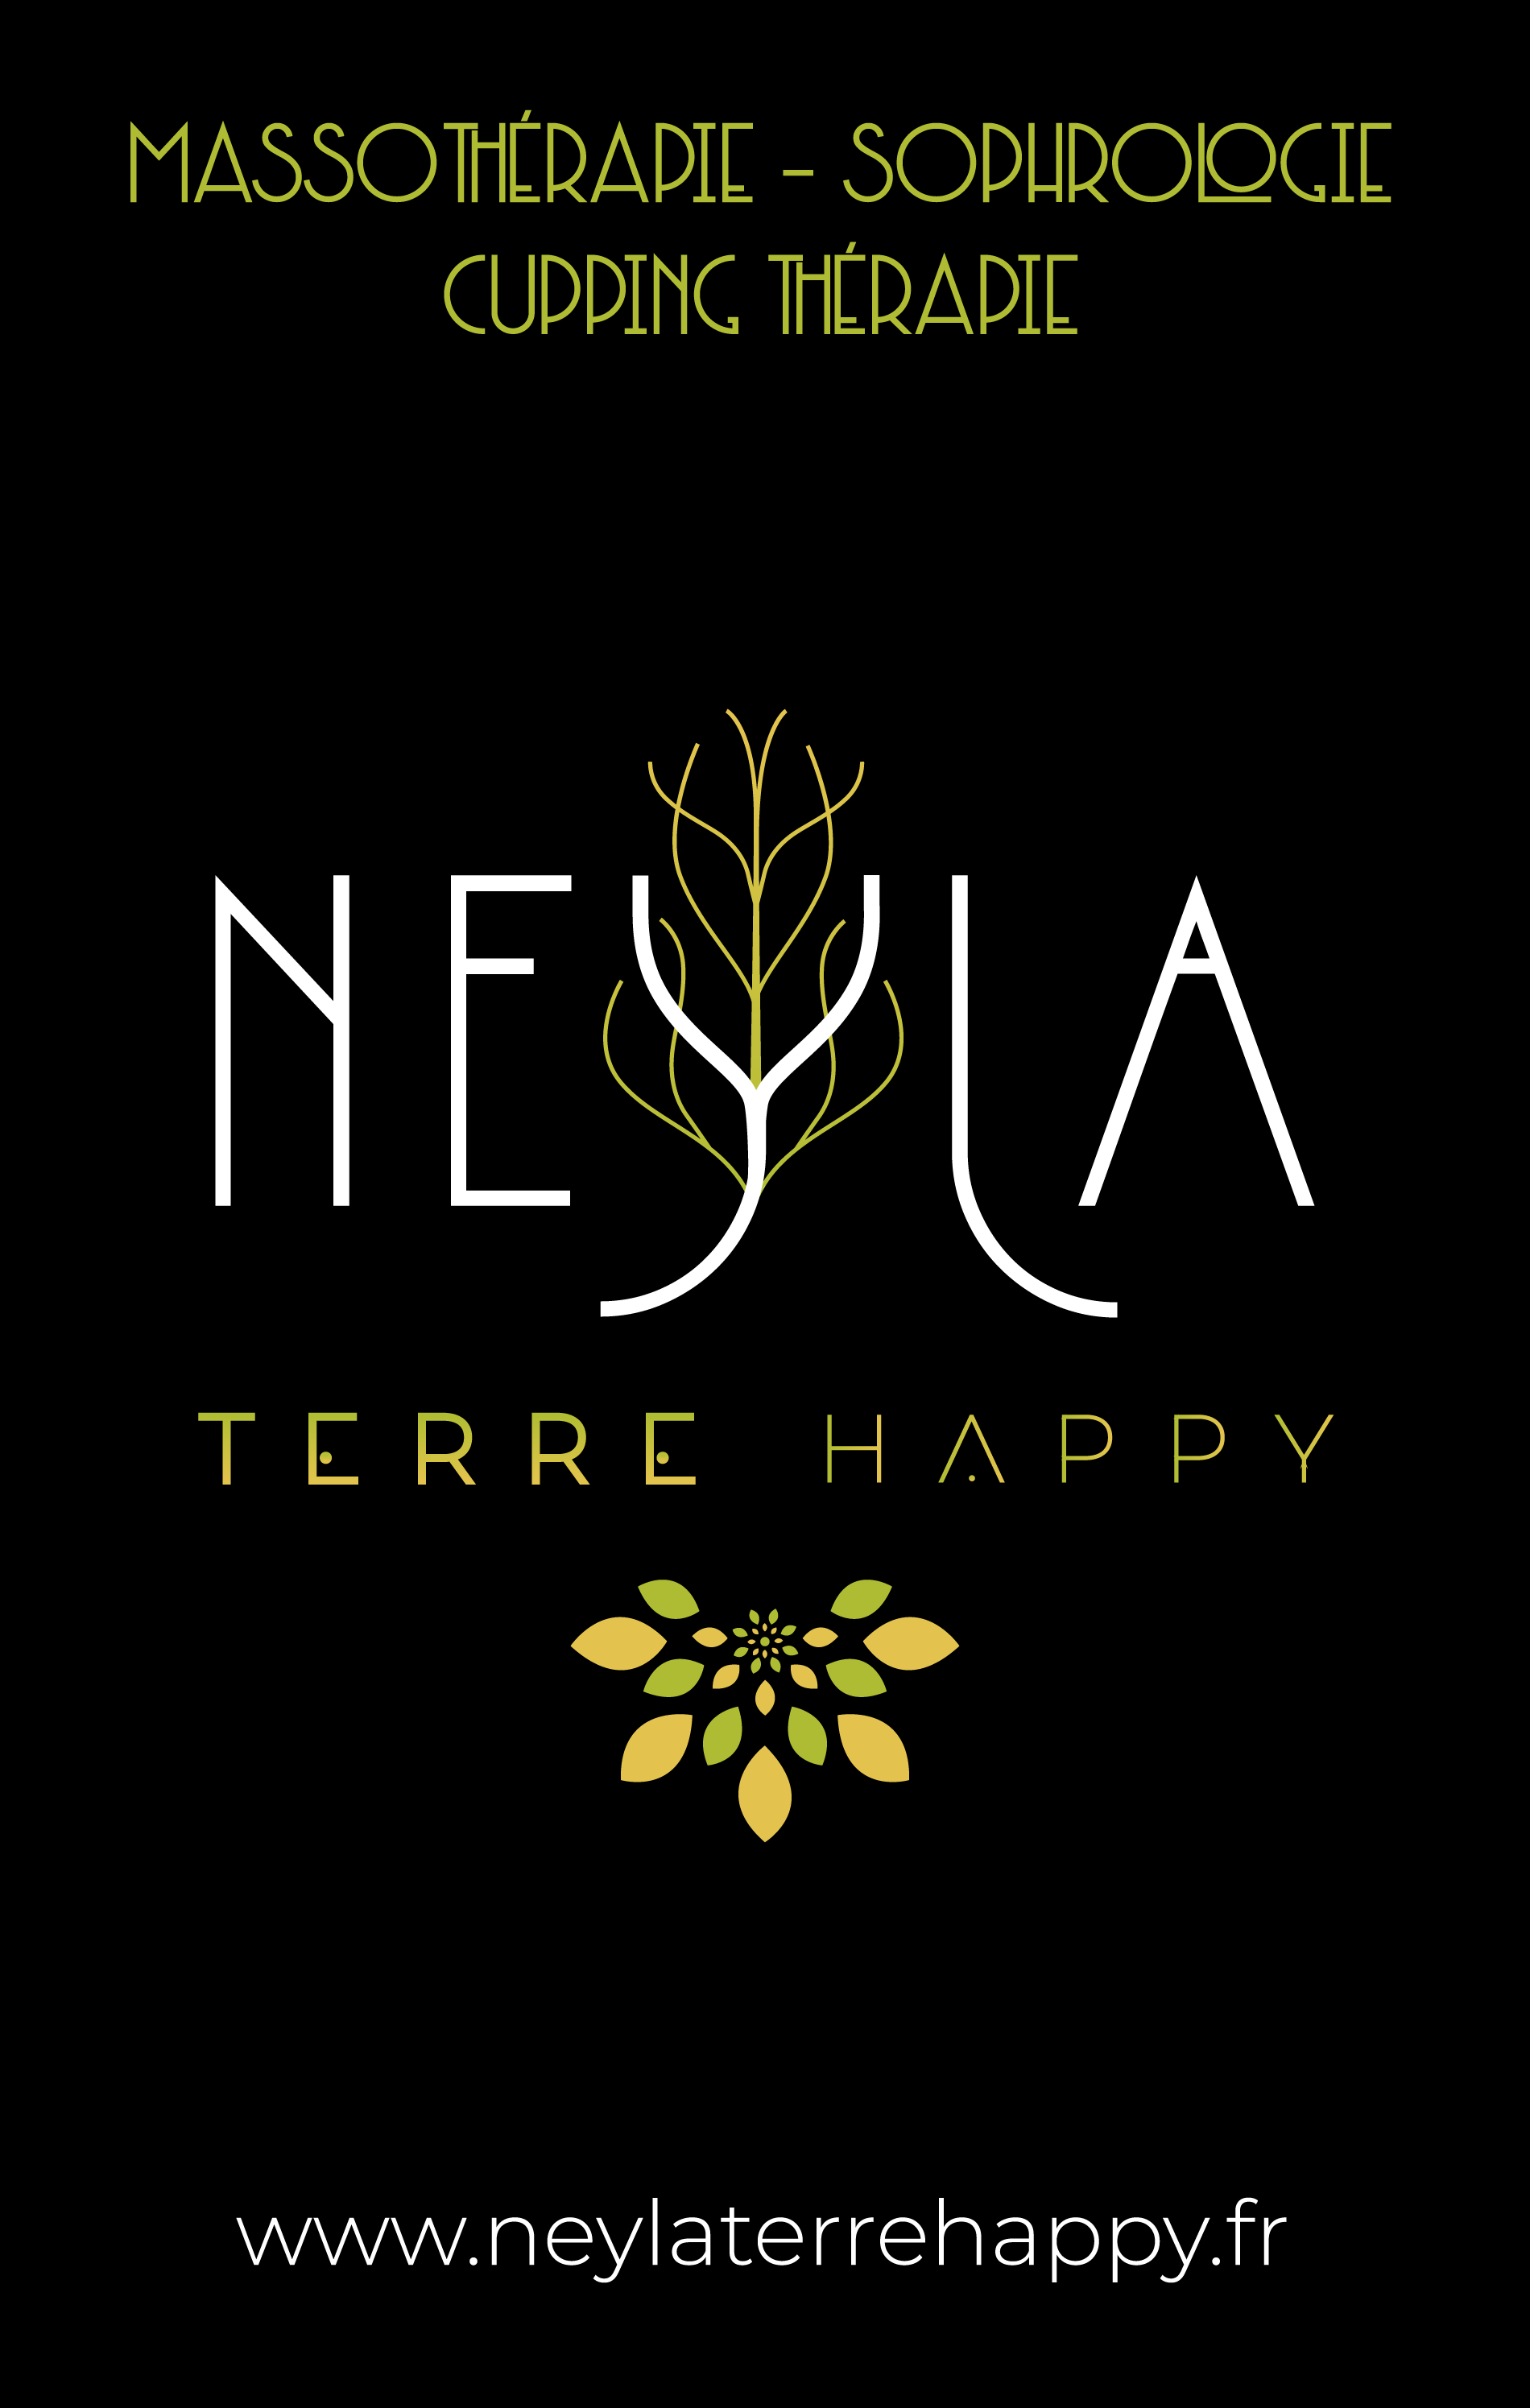 neyla-terre-happy-therapie-sophrologie-massotherapie-cupping-mâcon-71